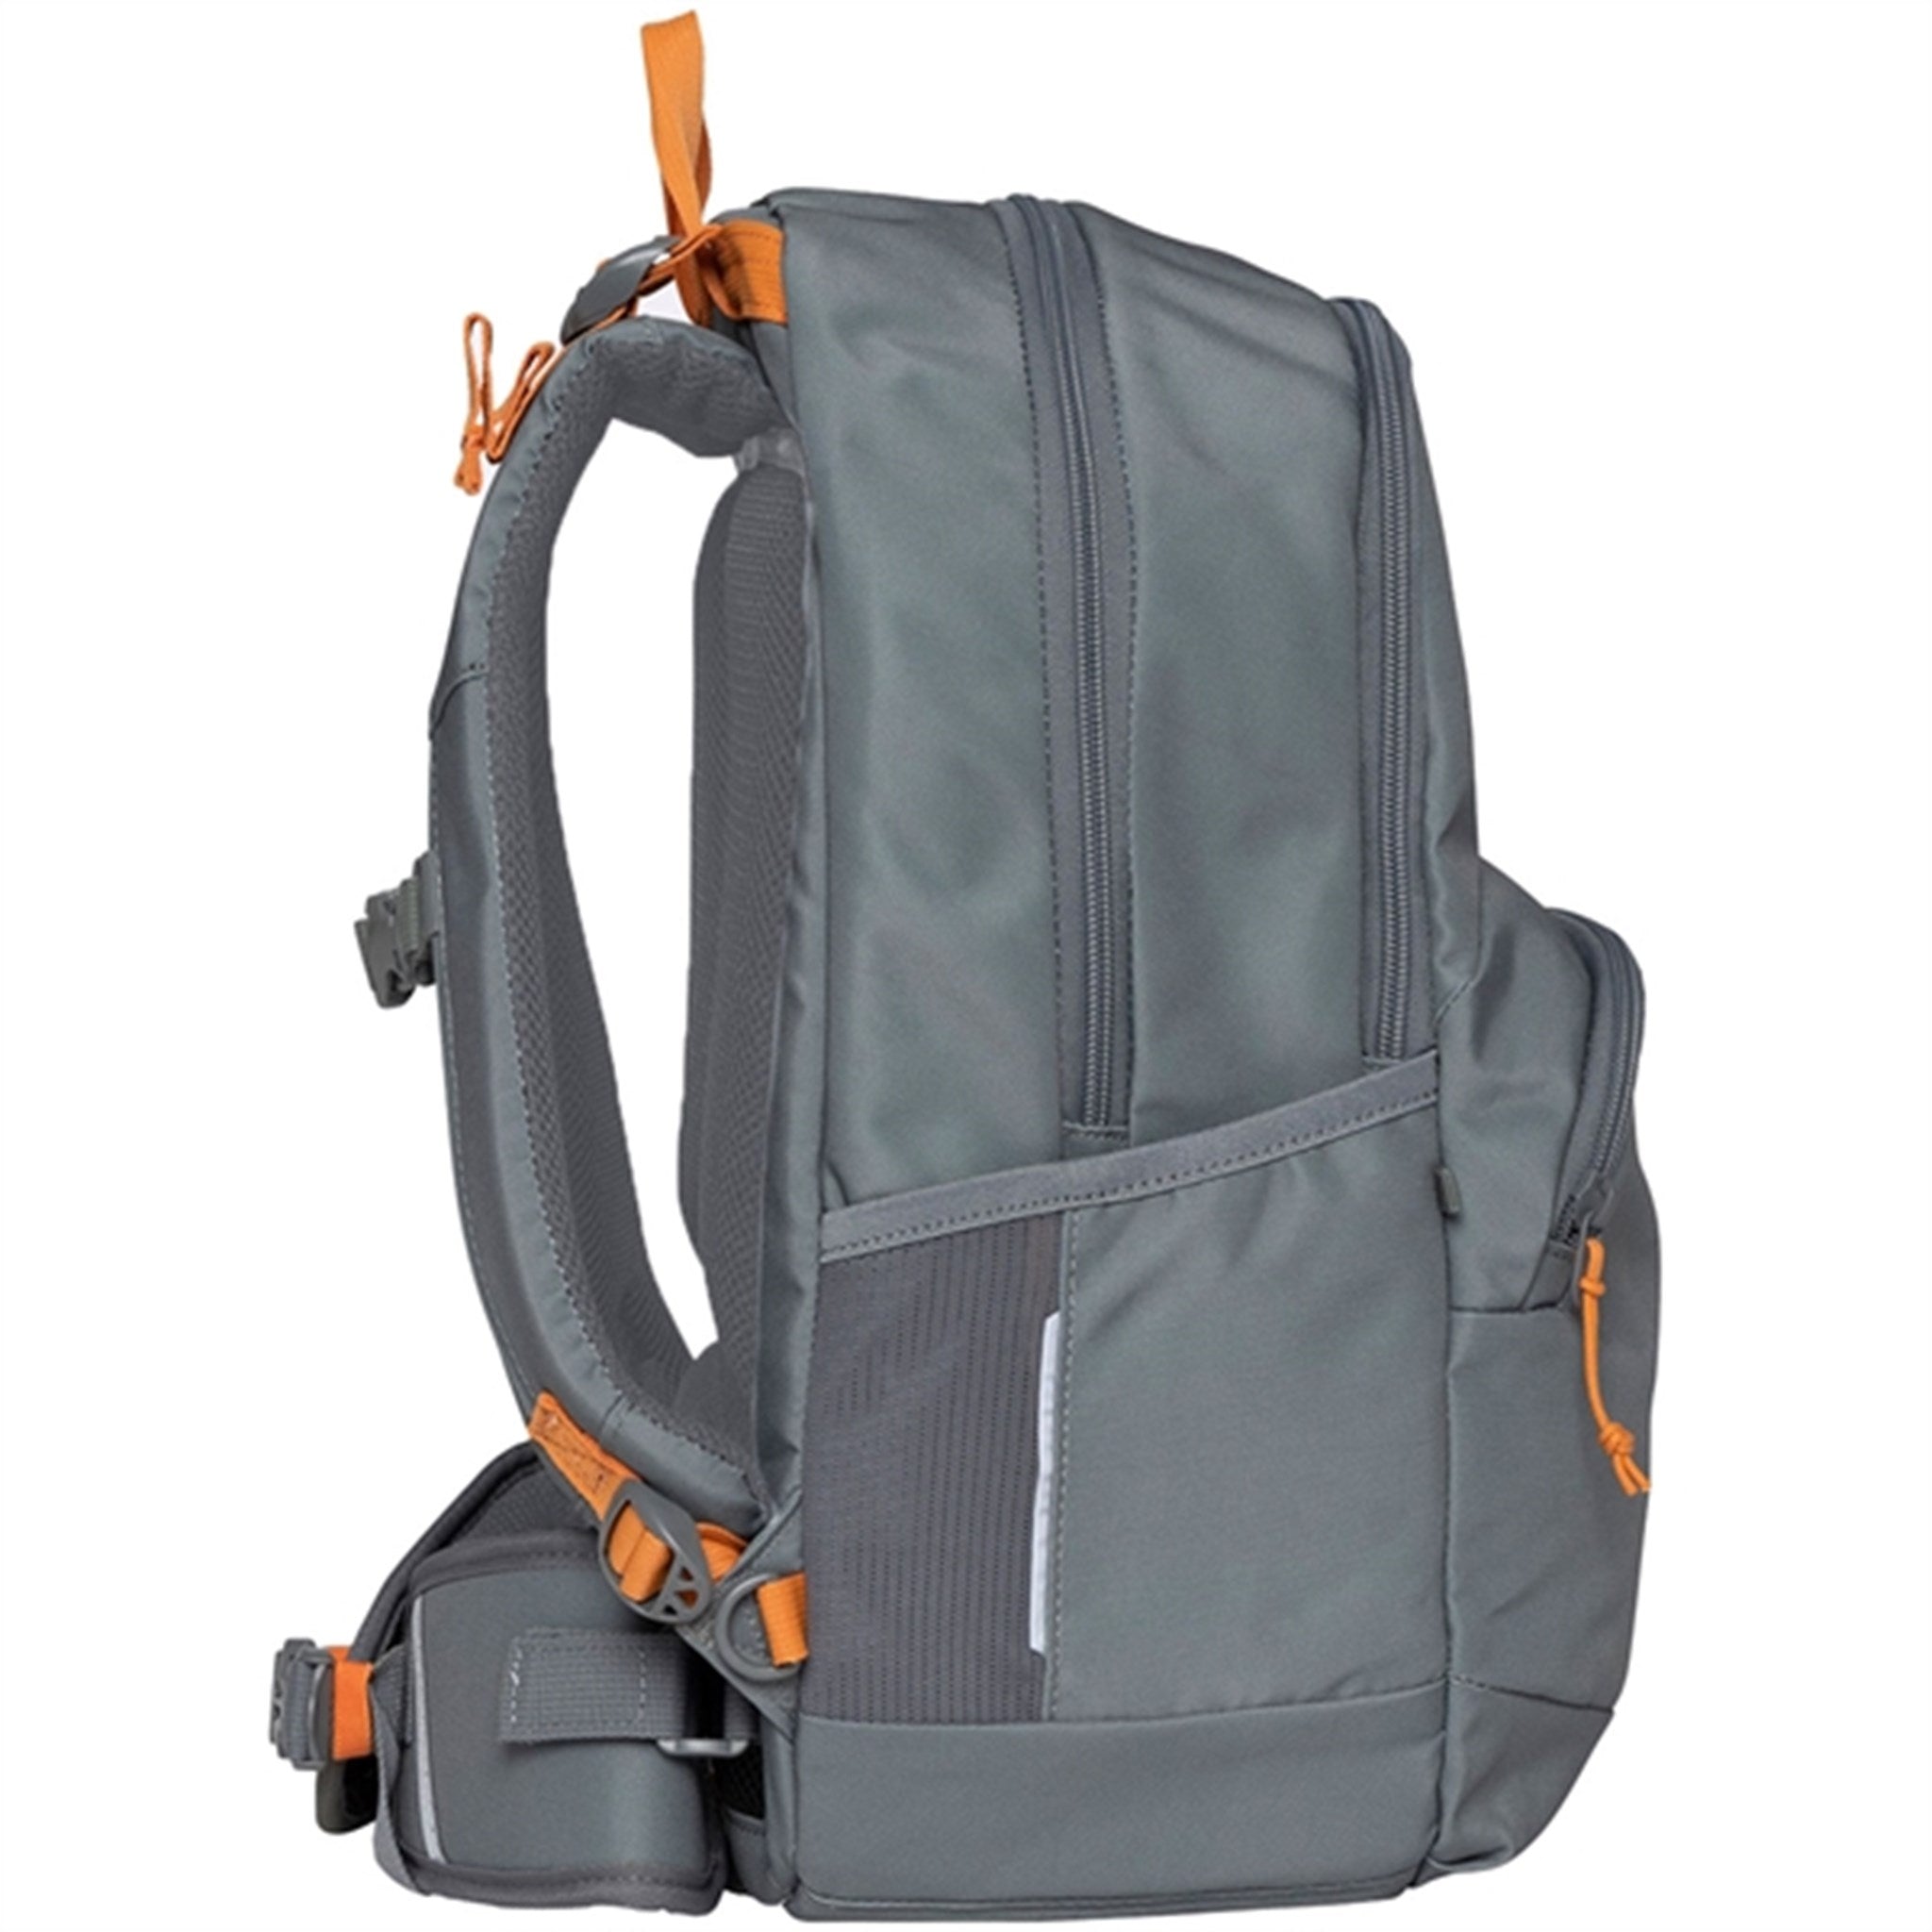 Beckmann Sport Junior Backpack Green Orange 8